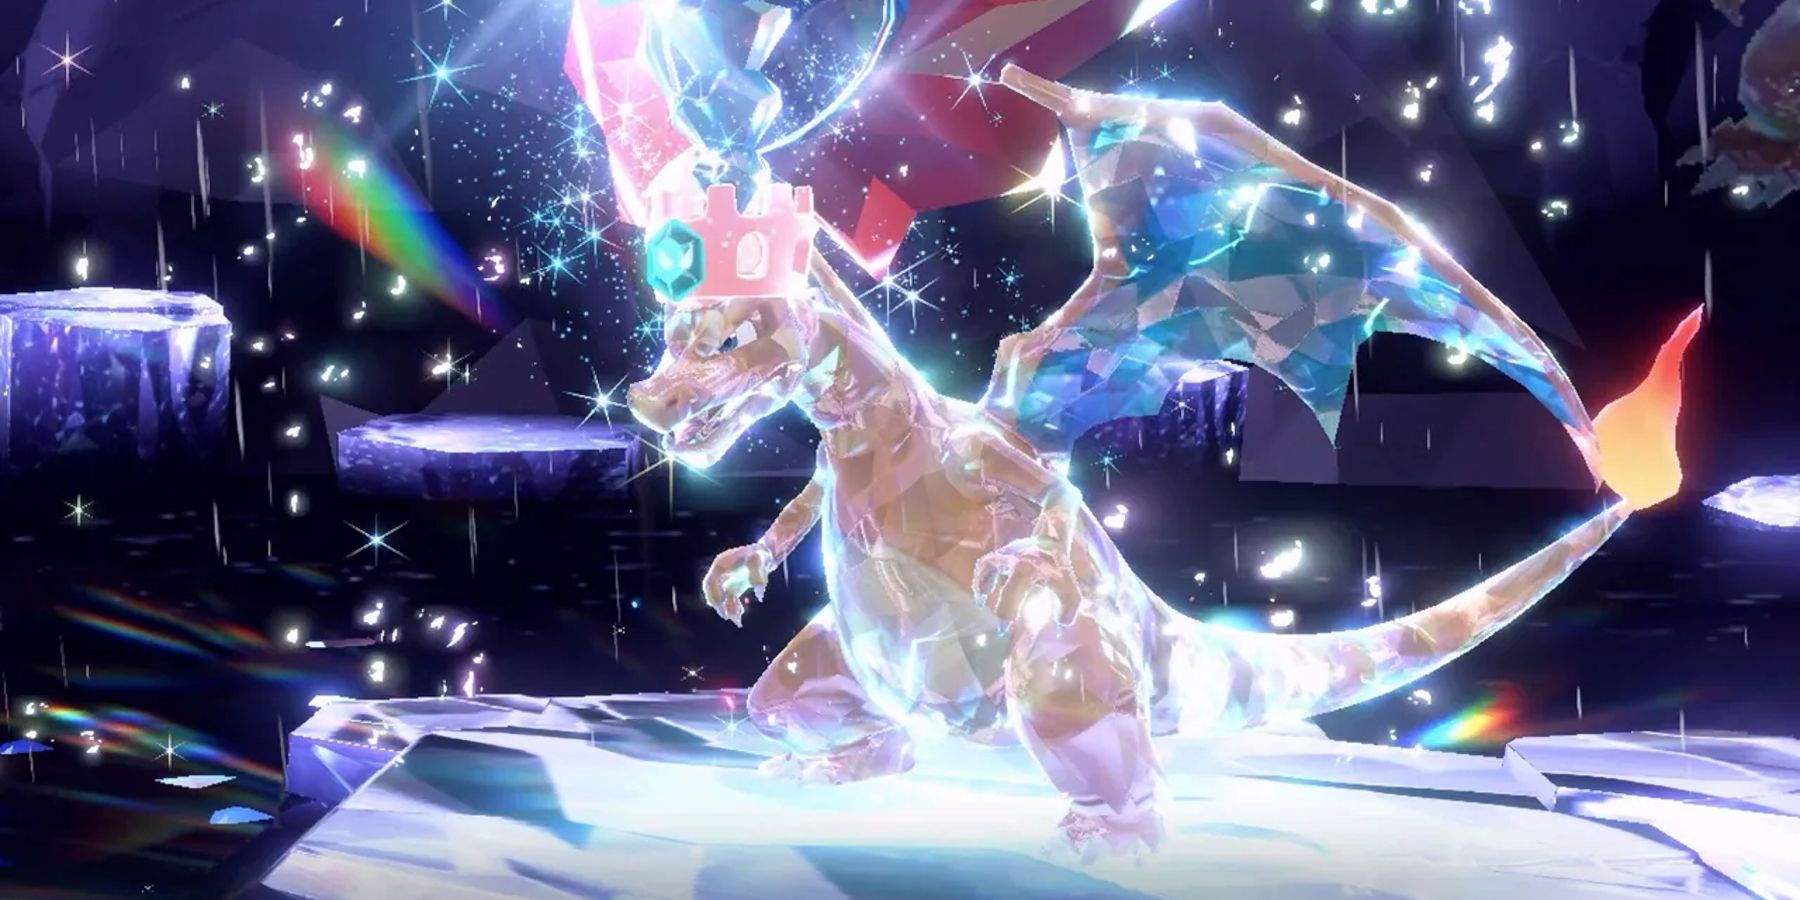 Best Mewtwo Event Tera Raid Build - Black Crystal Tera Raids - Tera Type  Pokémon, Pokémon Scarlet & Violet